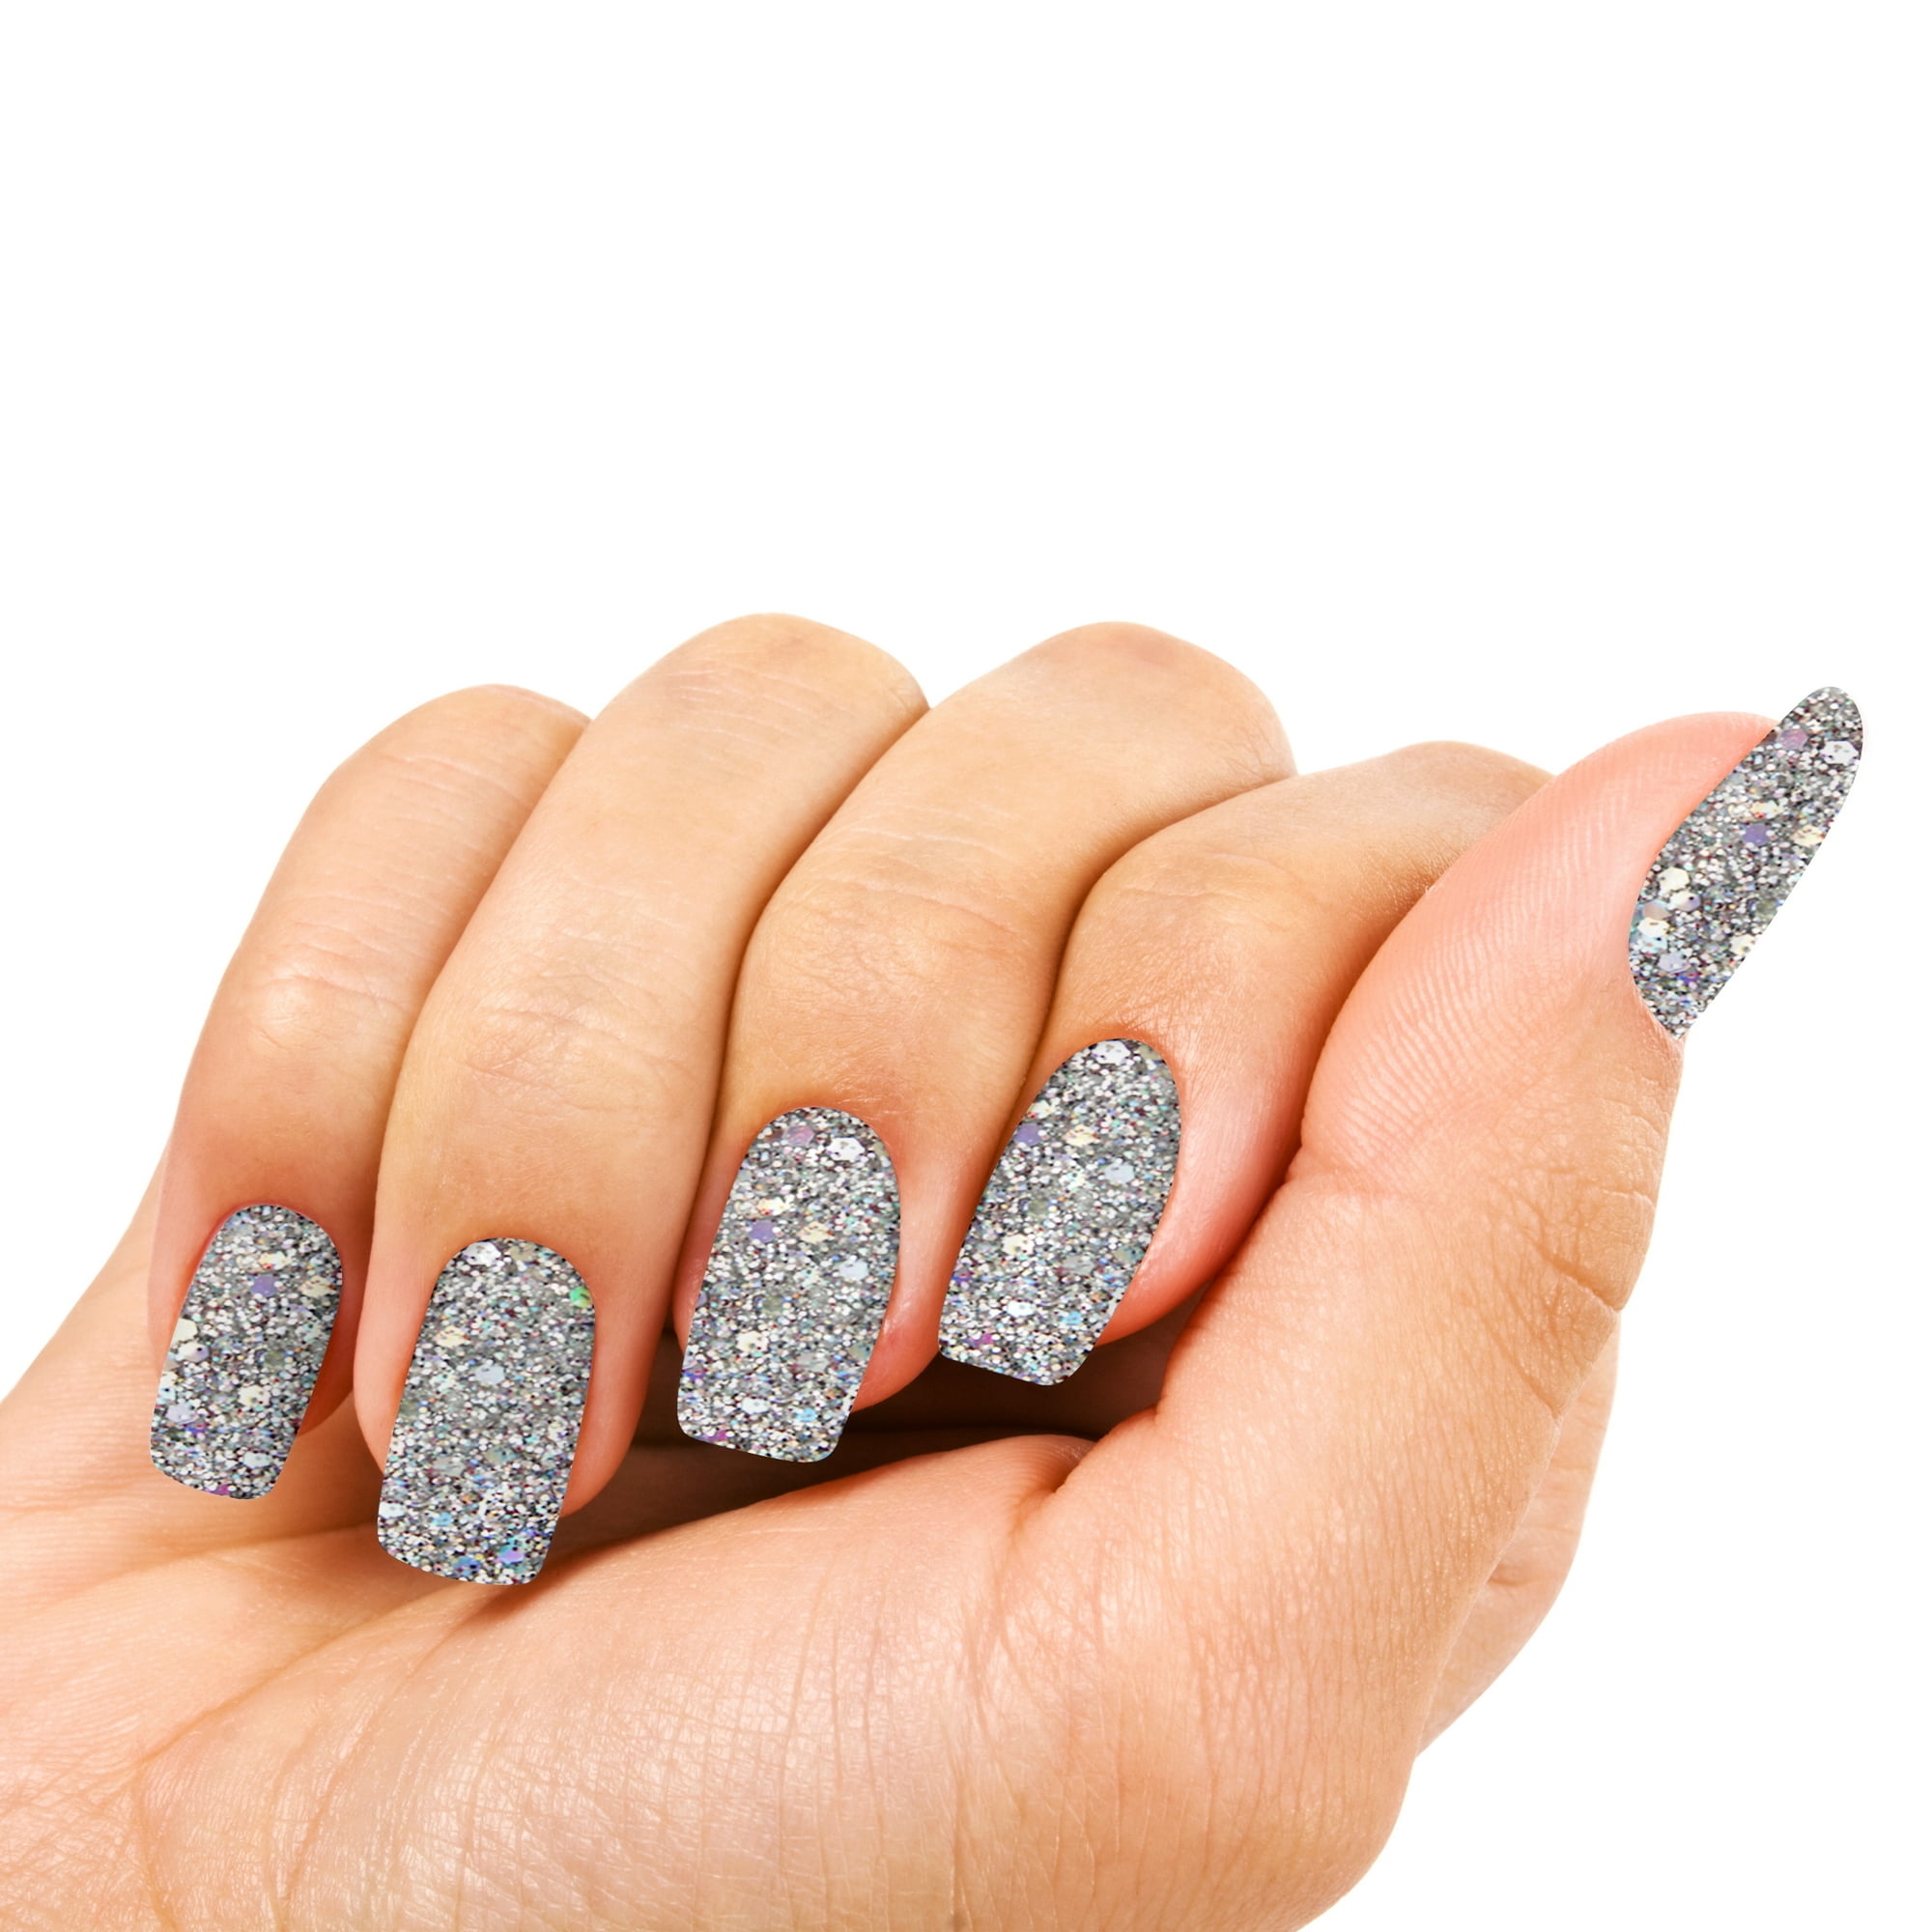 model wearing sparkly silver nail polish